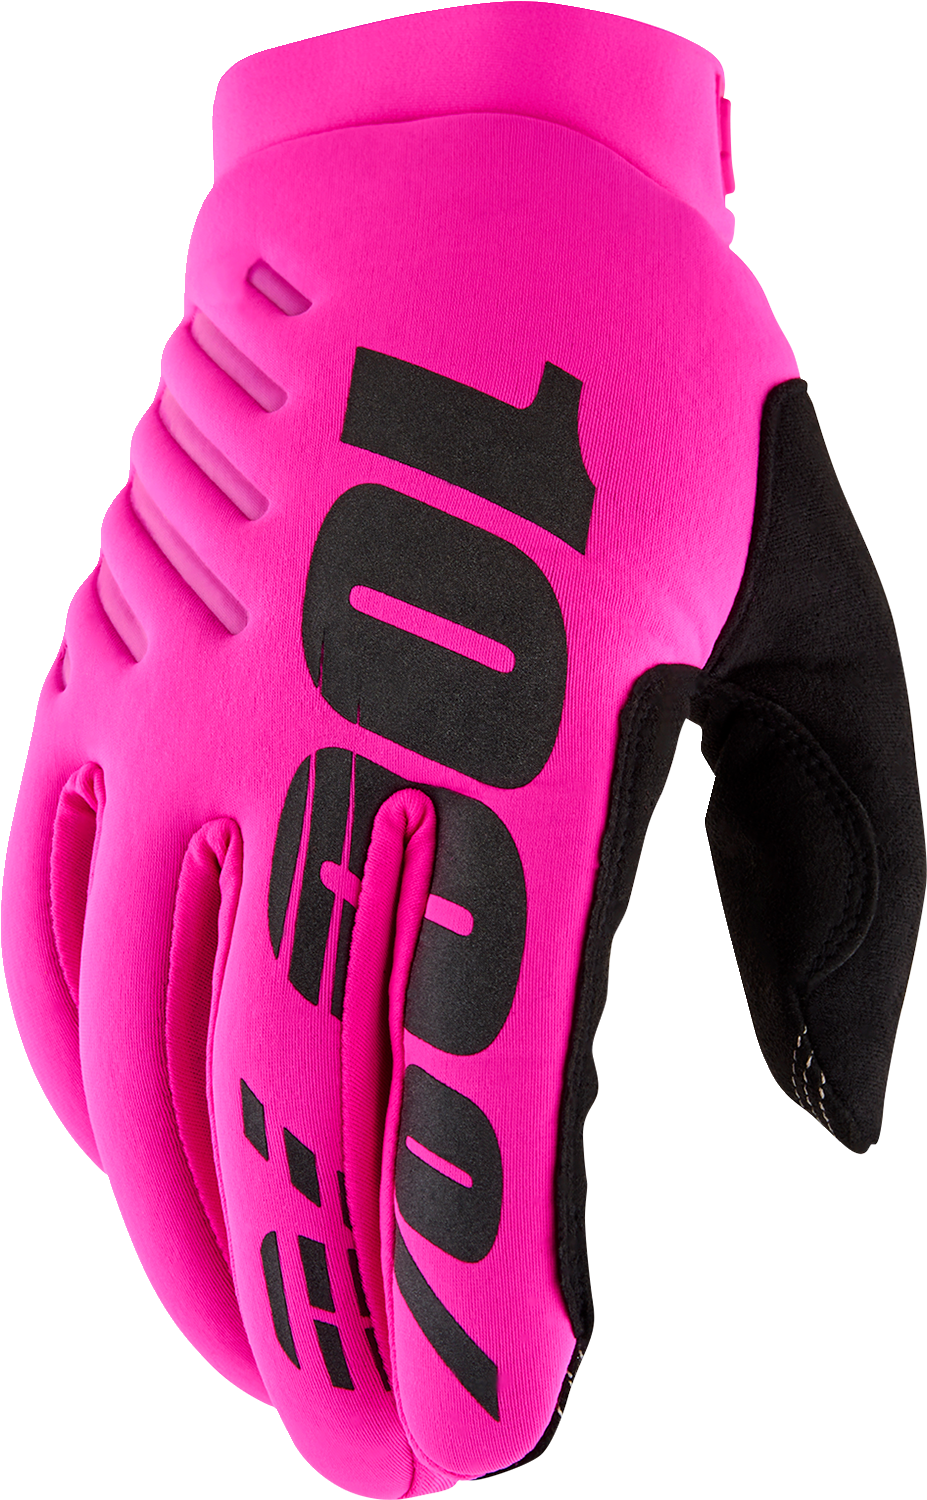 100% Women's Brisker Gloves - Neon Pink/Black - Small 10005-00006